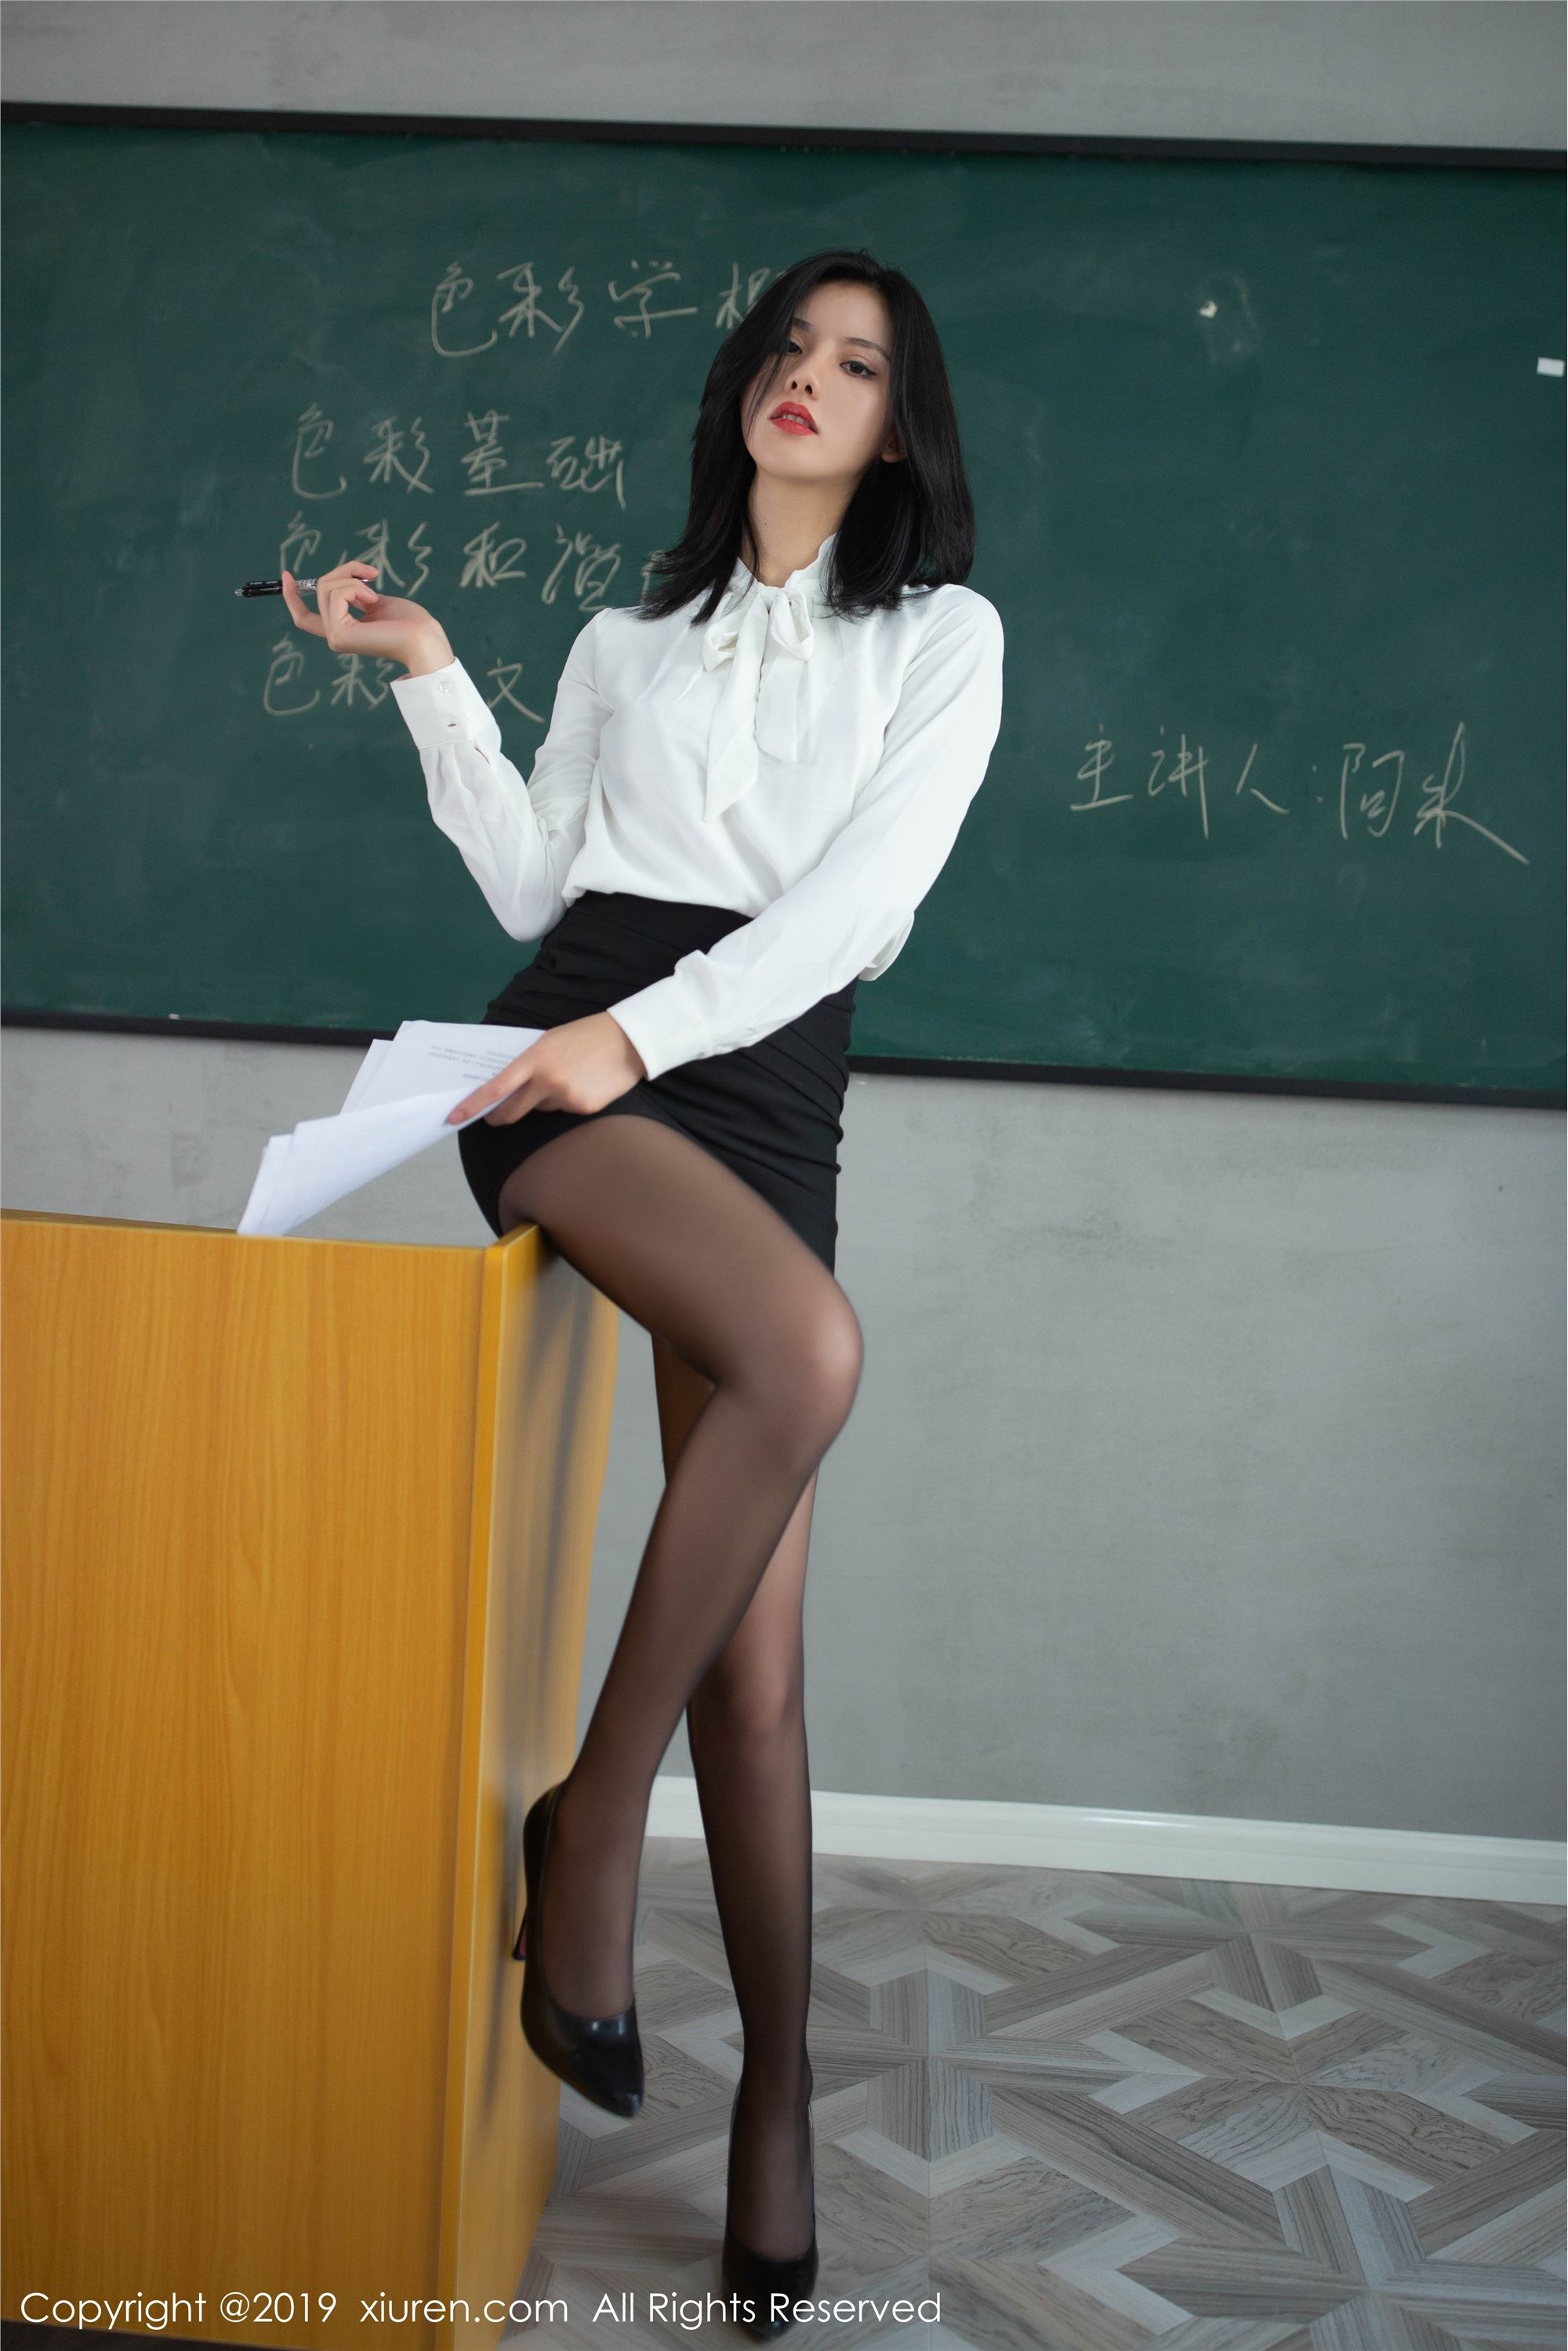 Xiuren xiuren photo no.1690 white shirt and black stockings show legs and hips, smart and attractive is ah Zhu